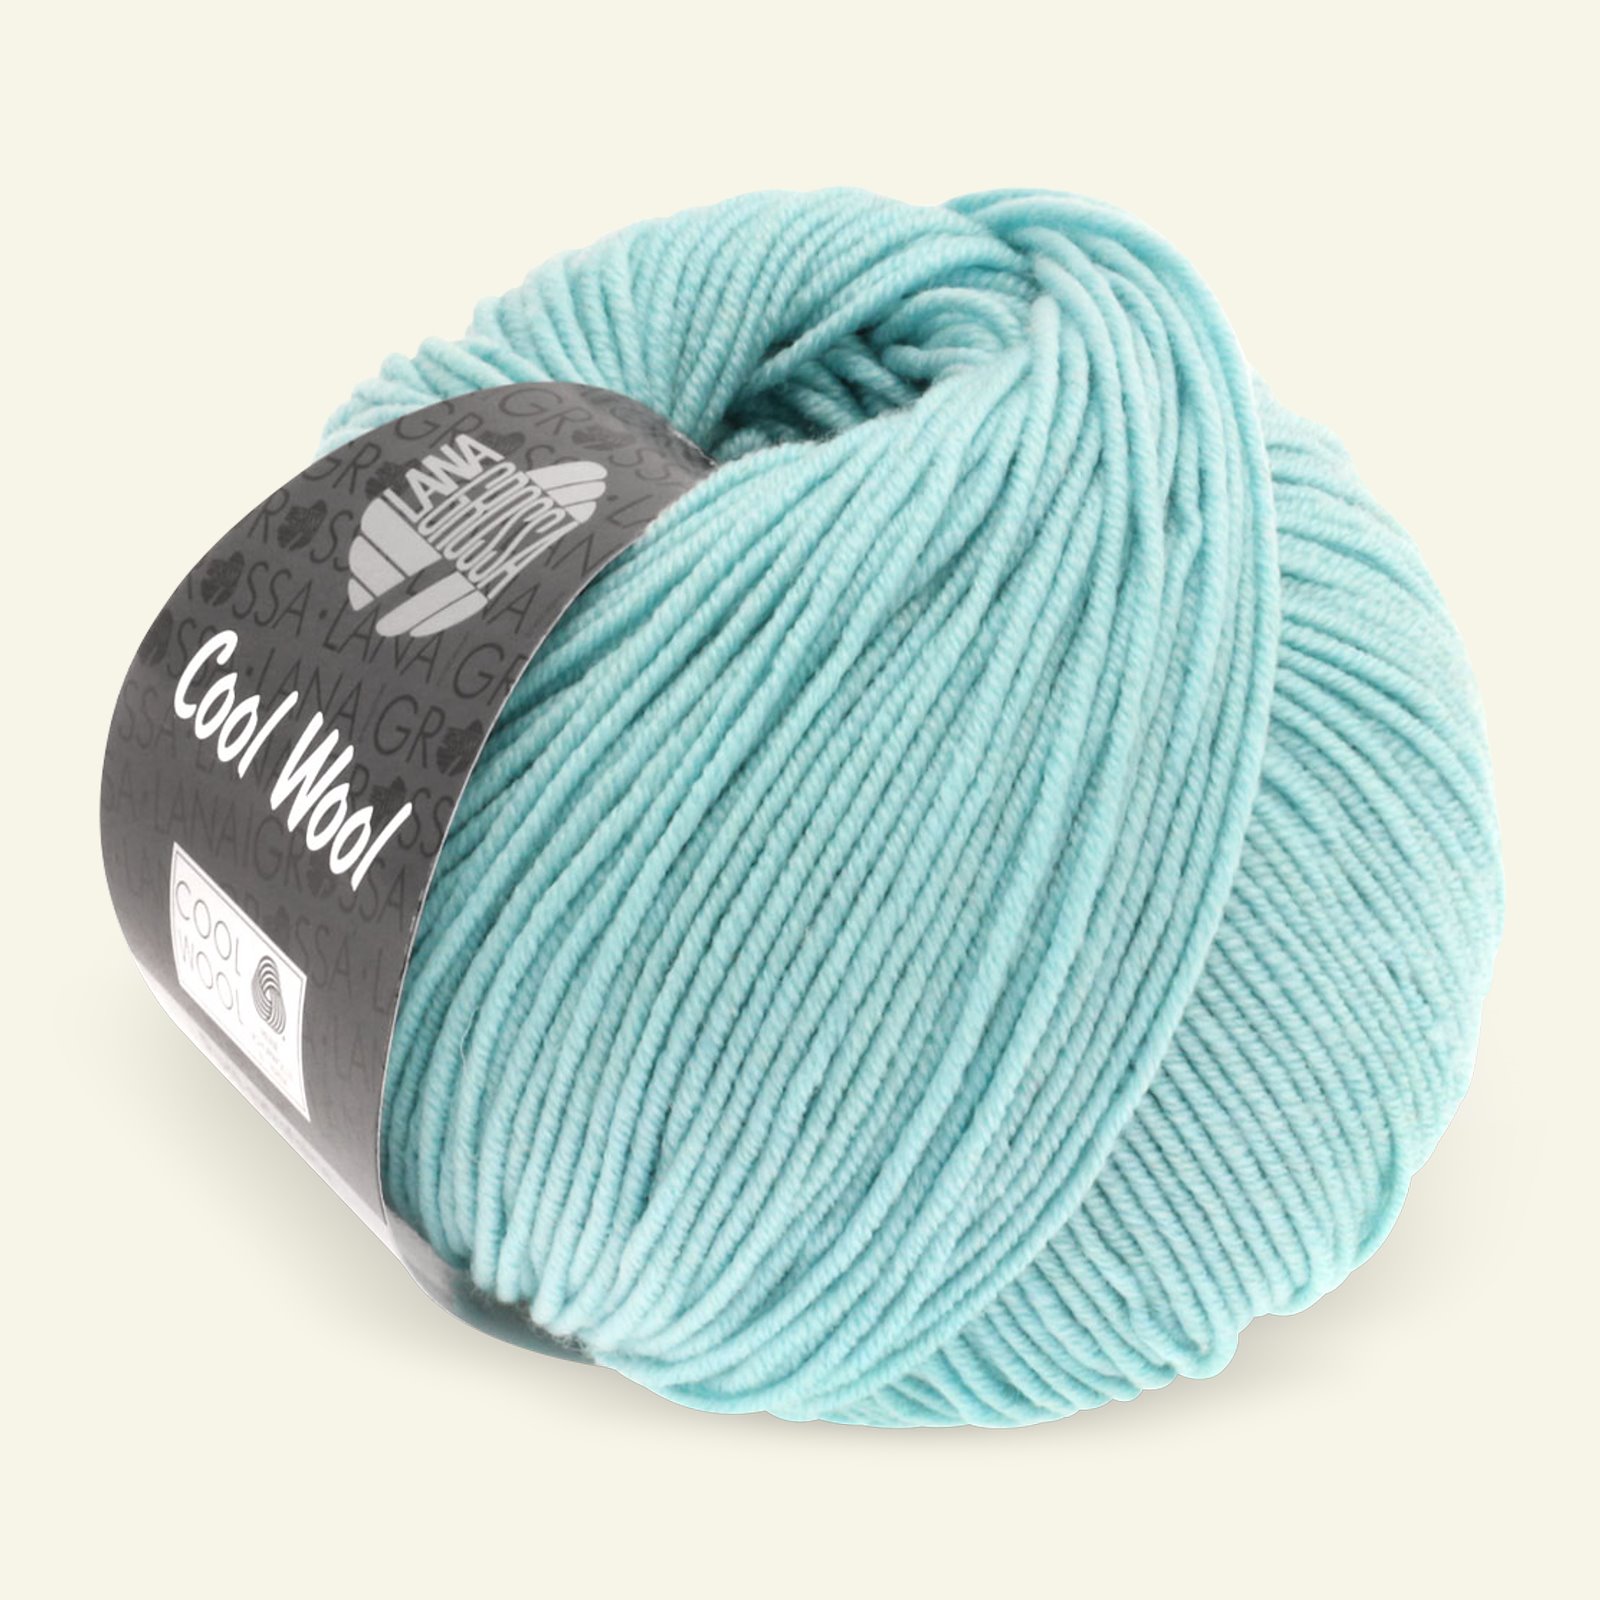 Lana Grossa, Extra feine Merinowolle Garn "Cool Wool", Türkis 90001125_pack